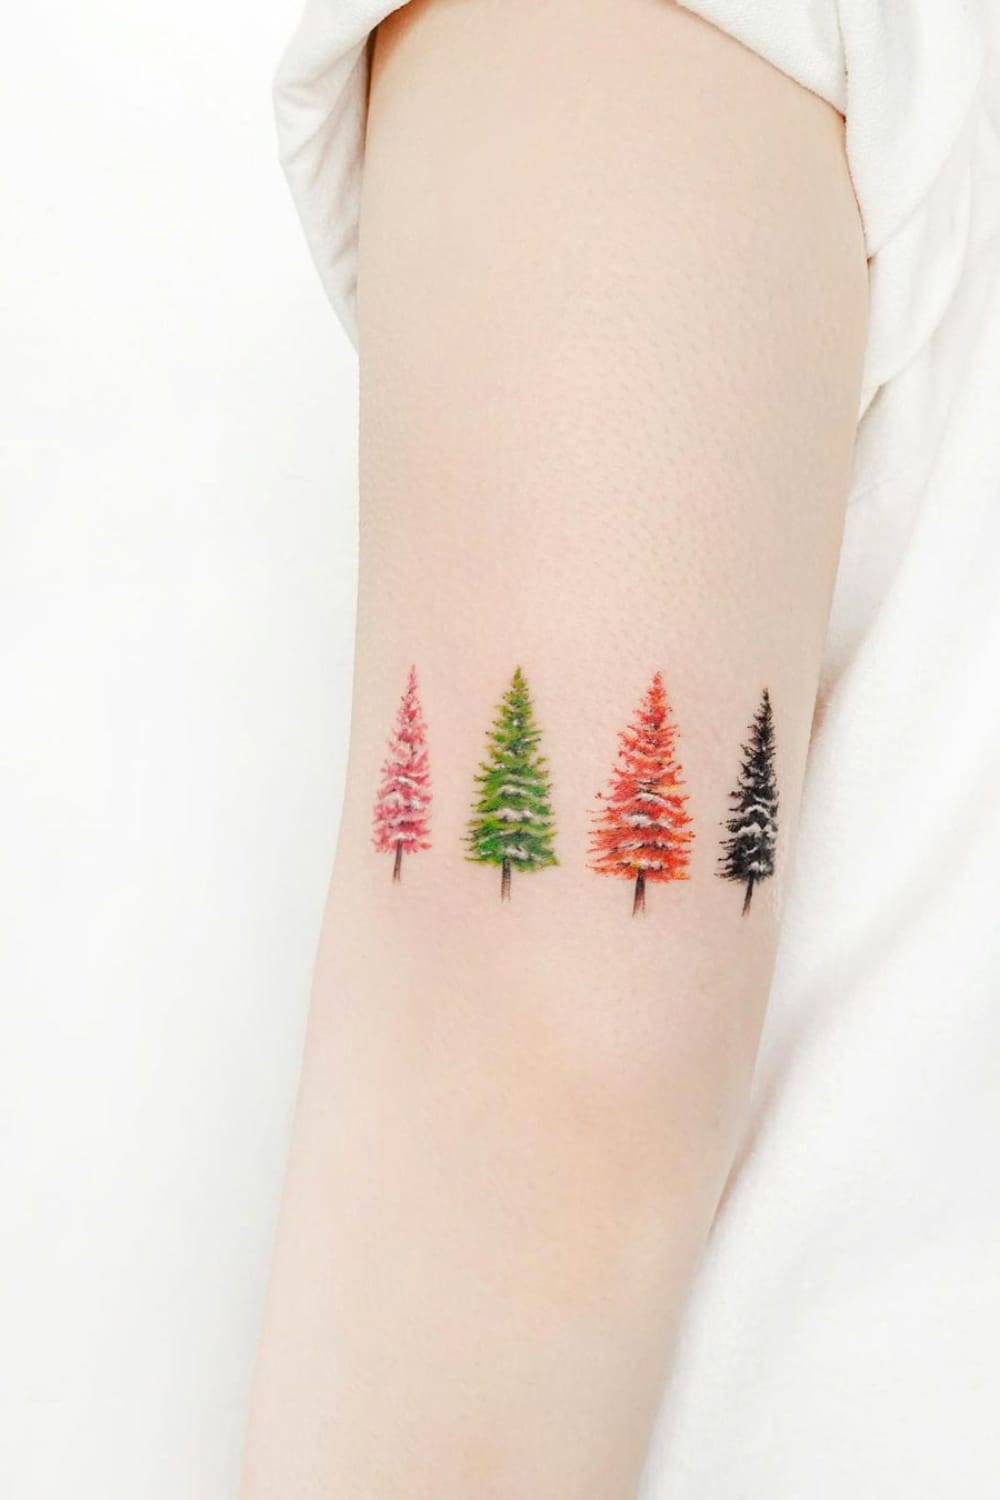 50 Trending Tree Tattoo Ideas